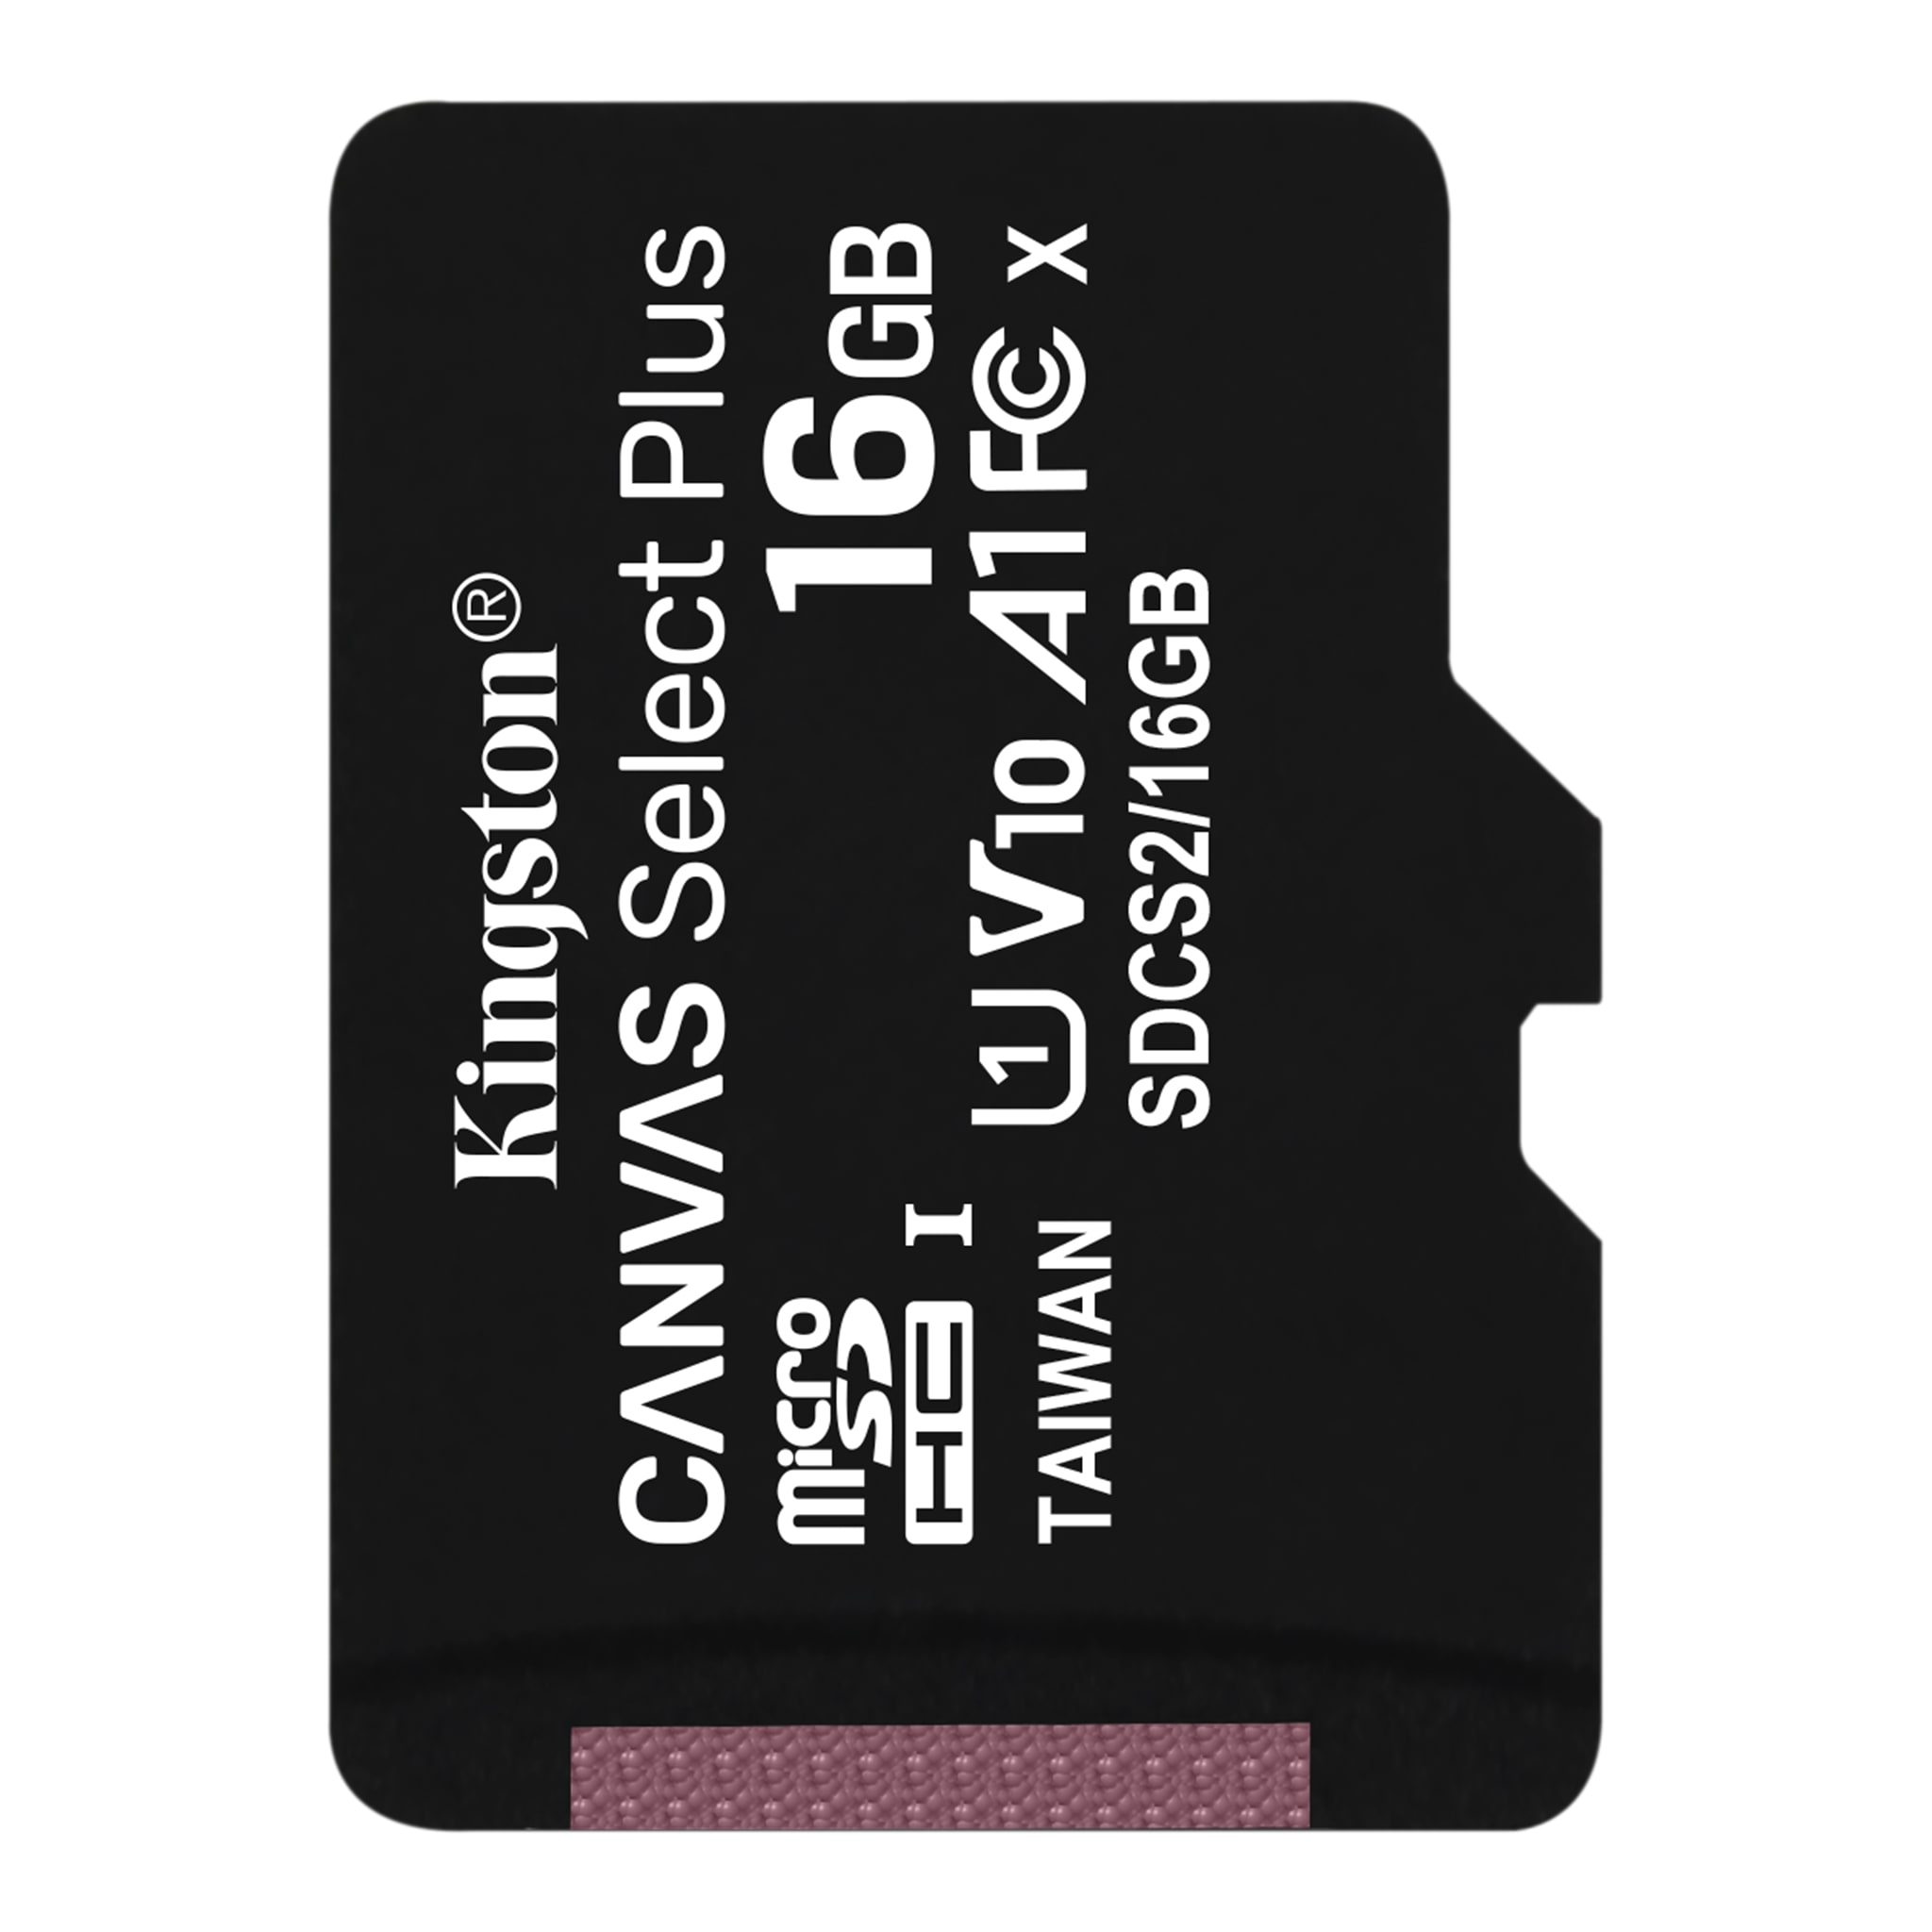 Kingston 128GB Motorola Moto G7 MicroSDXC Canvas Select Plus Card Verified by SanFlash. 100MBs Works with Kingston